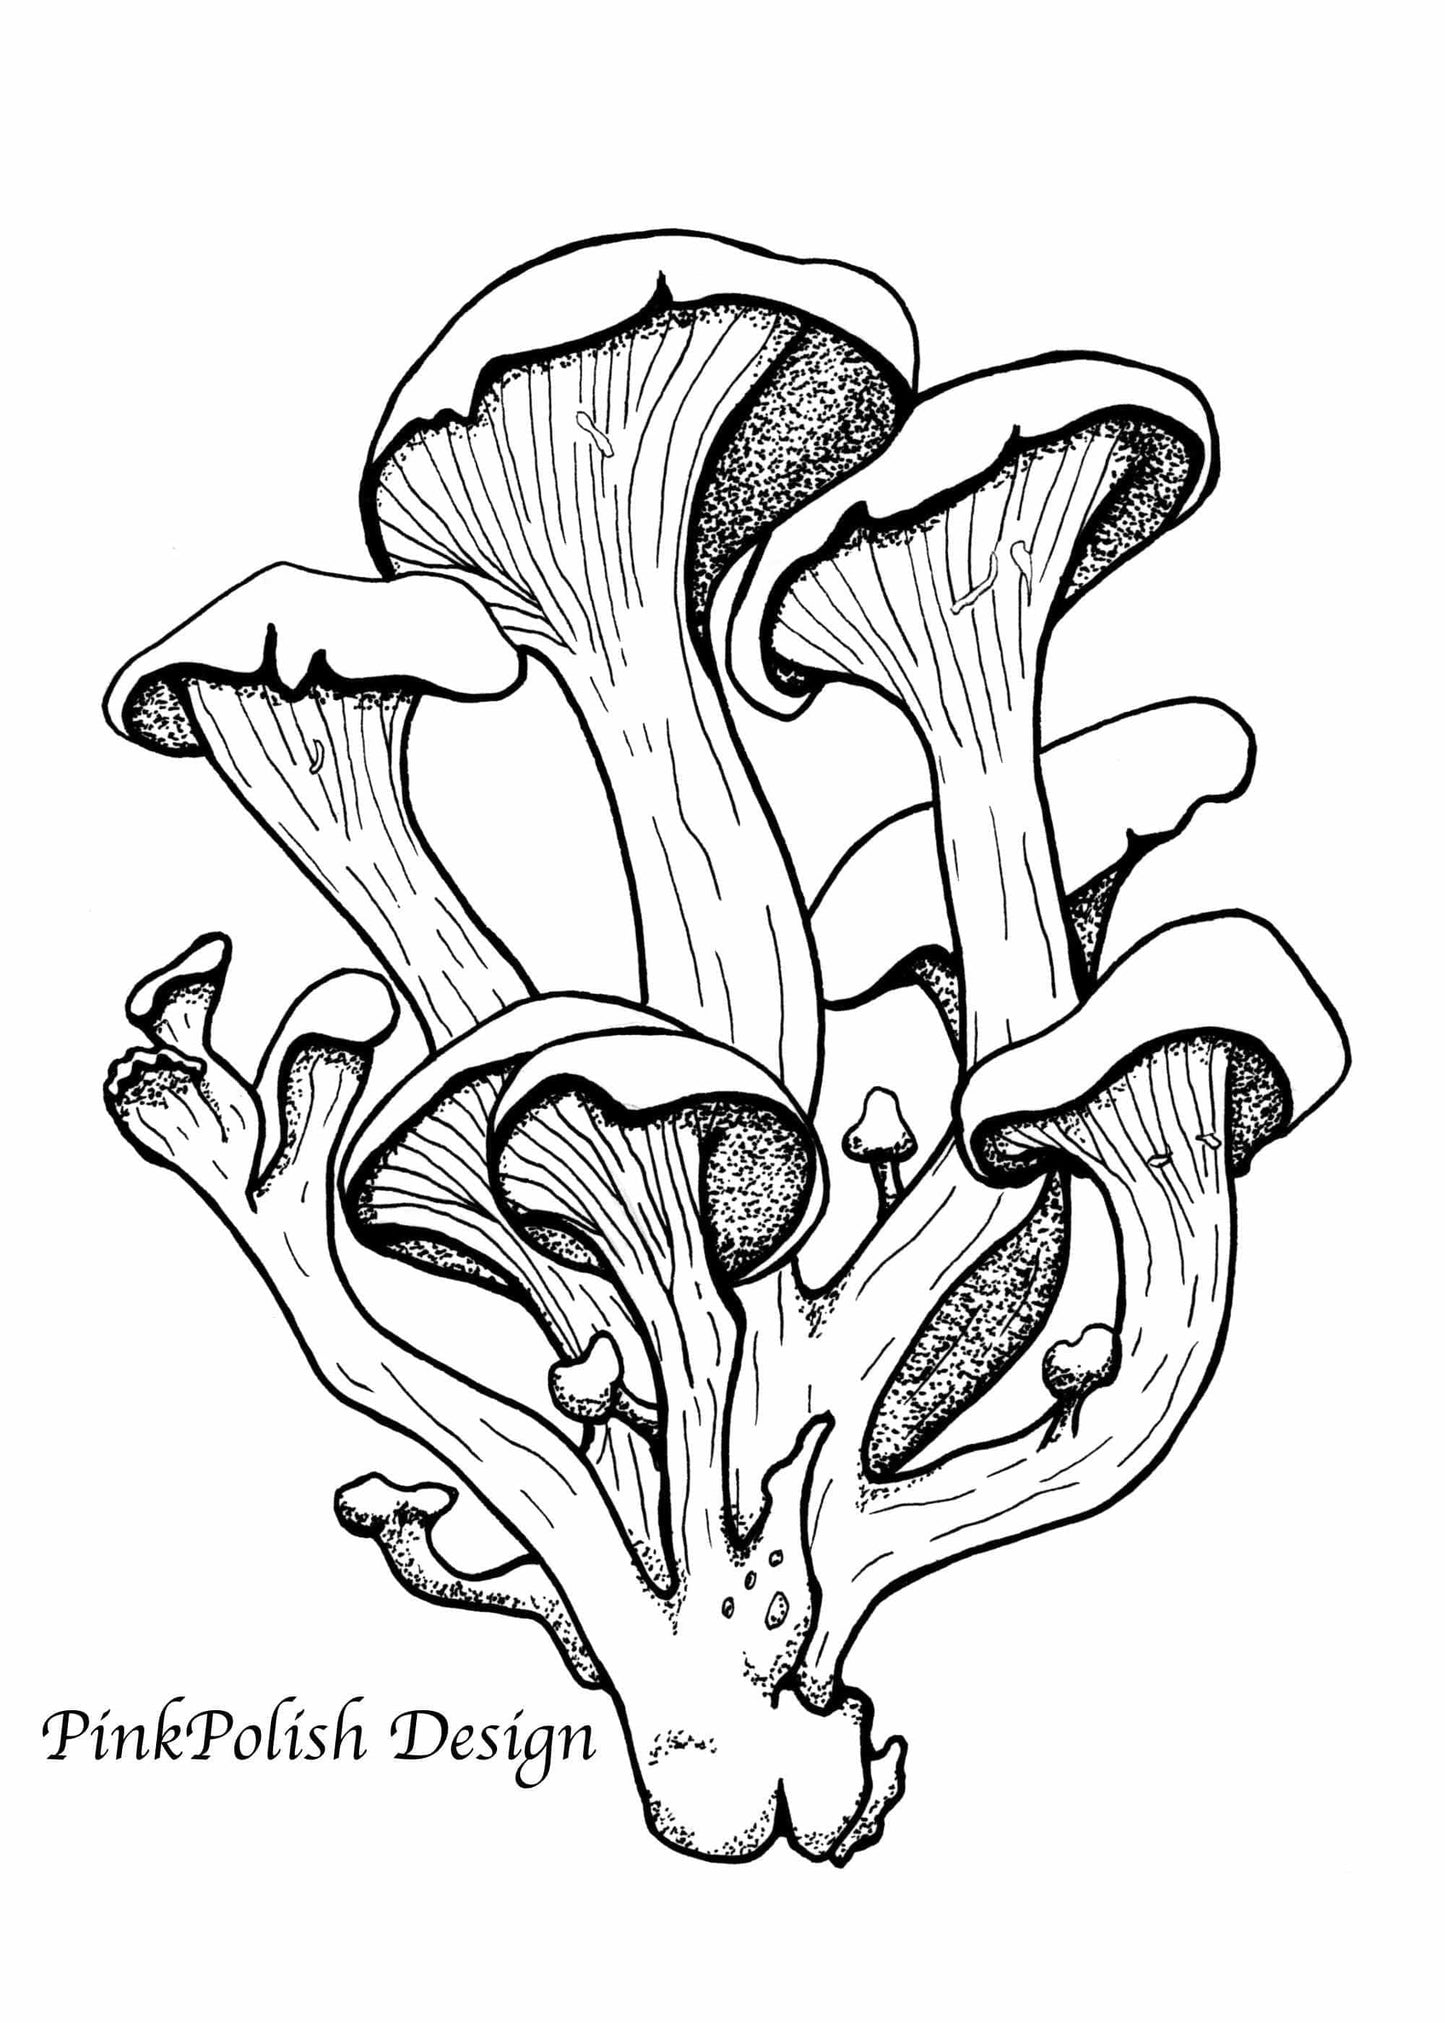 PinkPolish Design Art Prints "Oyster Mushroom" Ink Drawing: Art Print